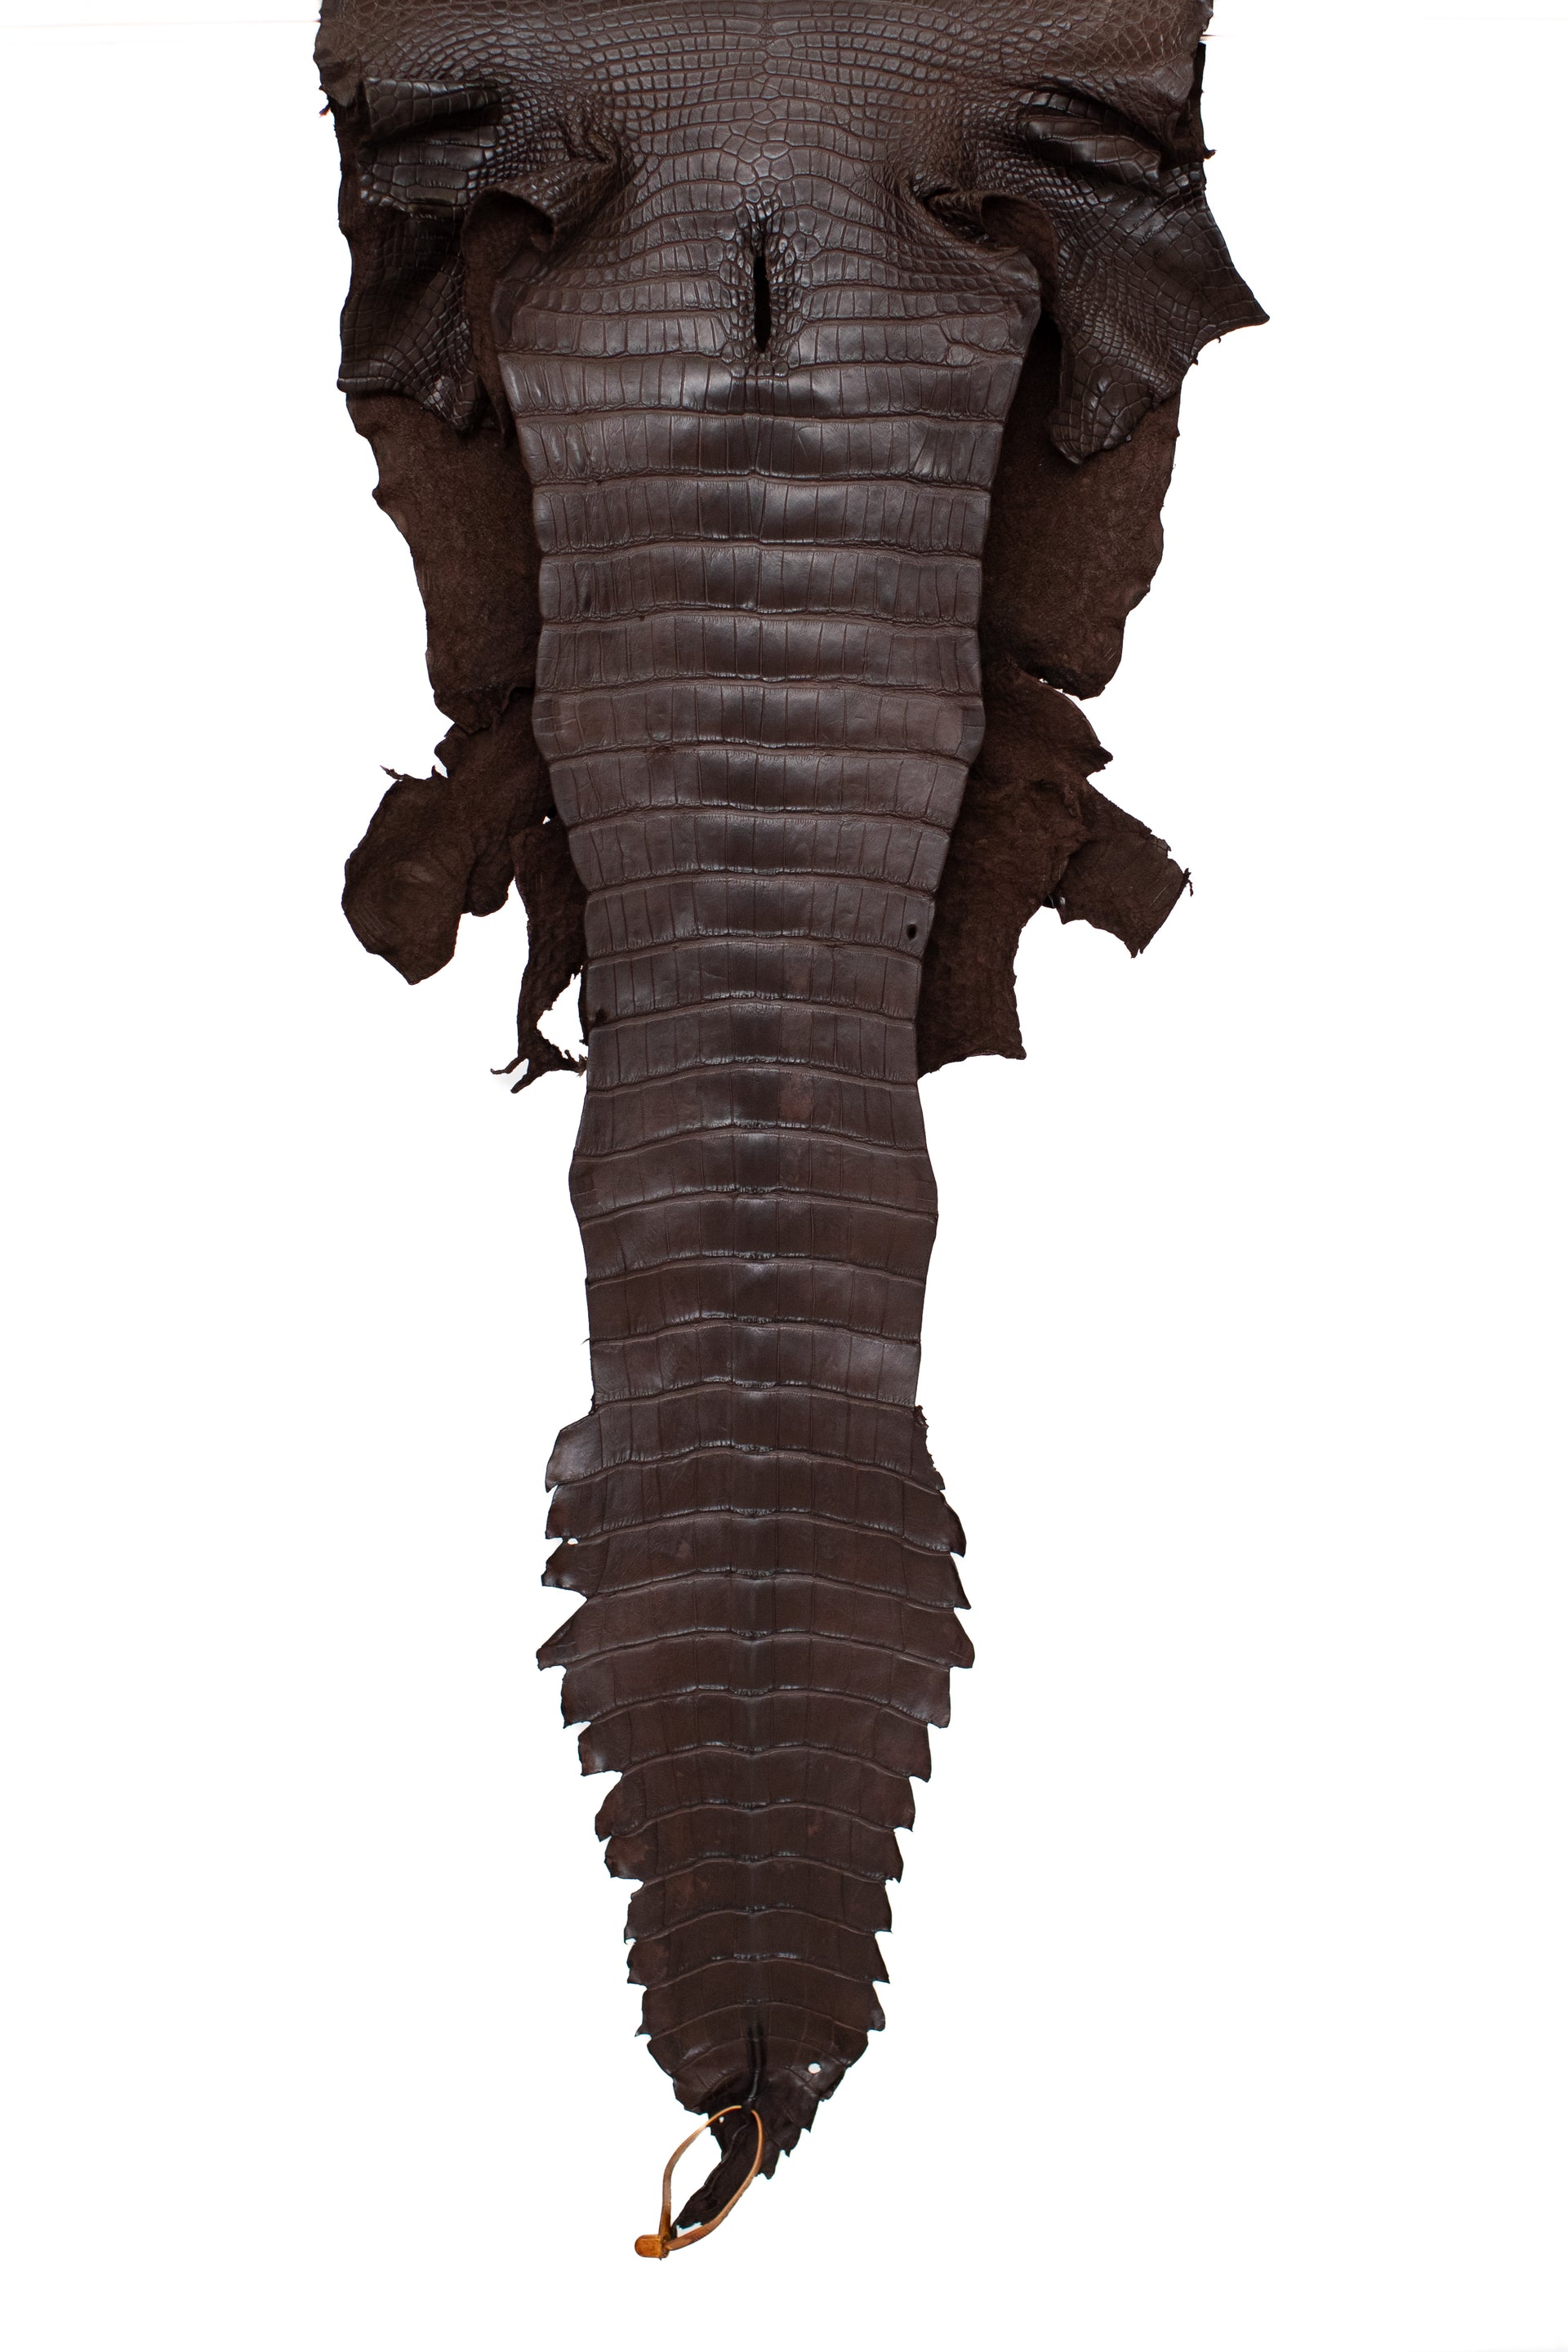 37 cm Grade 1/2 Chocolate Matte Wild American Alligator Leather - Tag: FL22-0002224